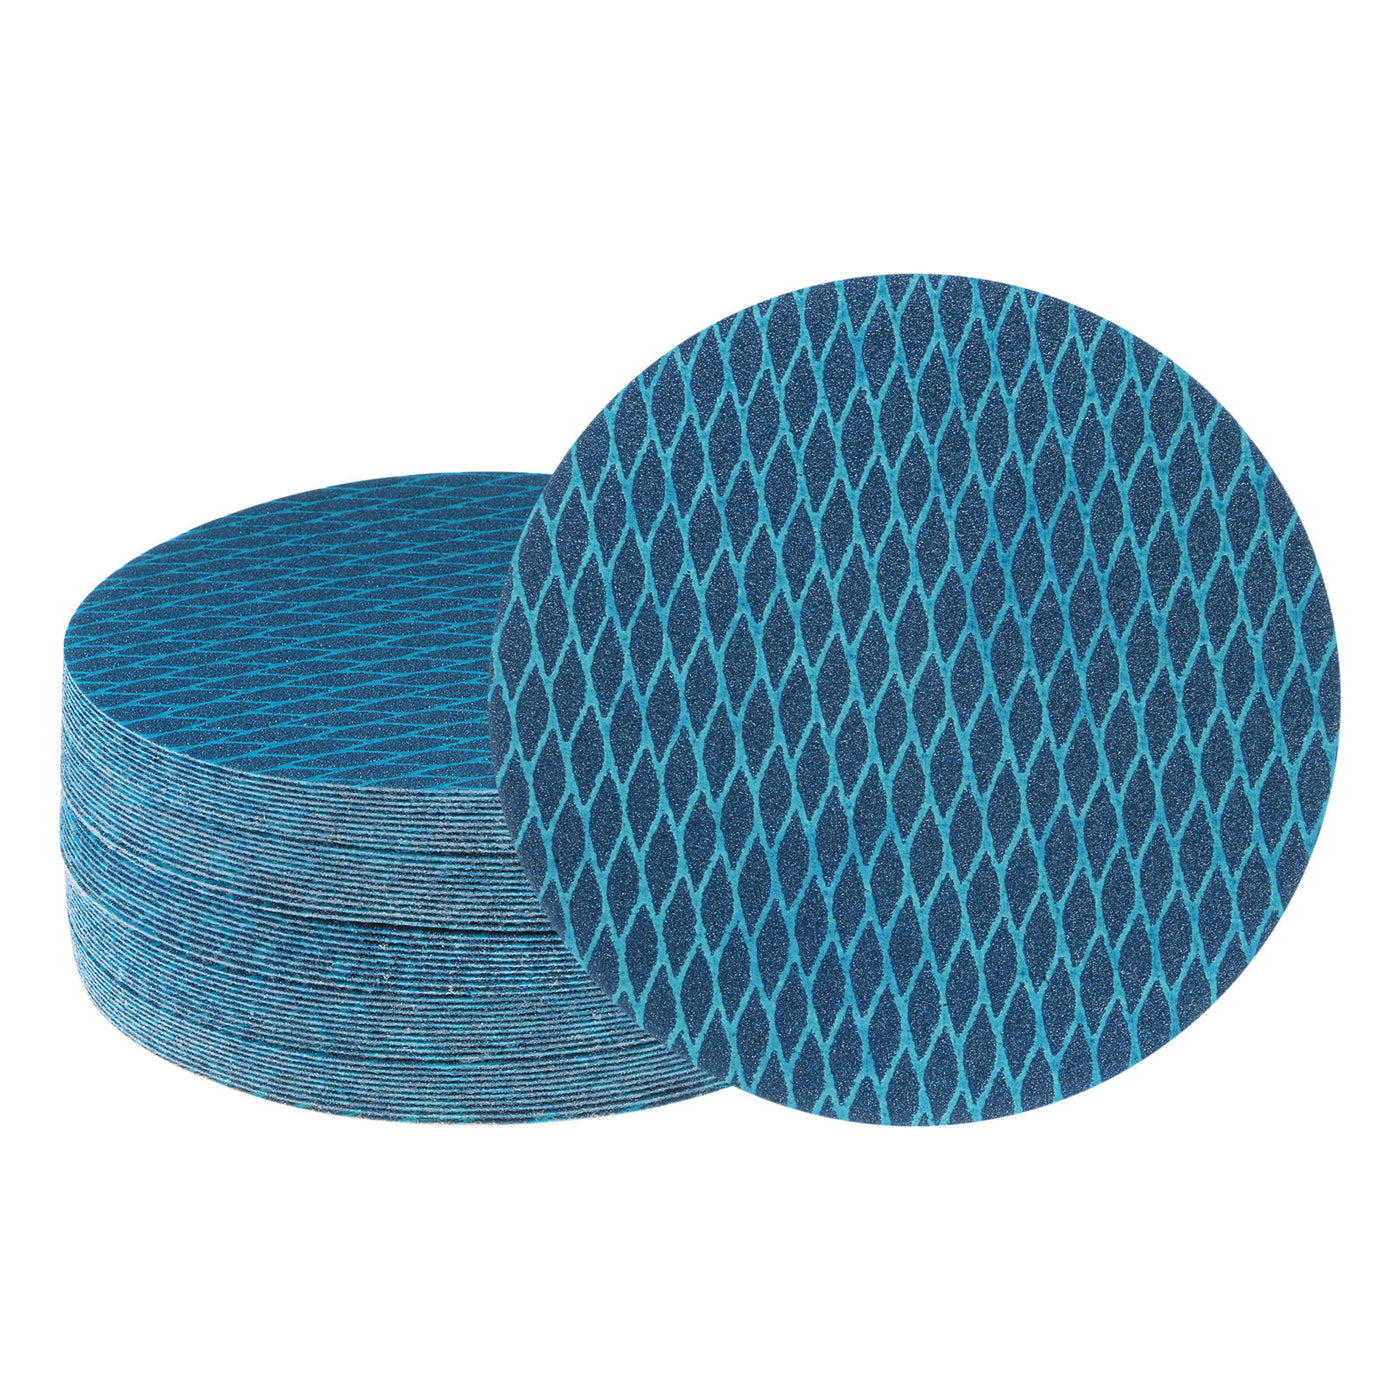 Harfington 50pcs Diamond Shape Sanding Discs 6 Inch 120 Grit Hook & Loop Rhomb Sandpaper